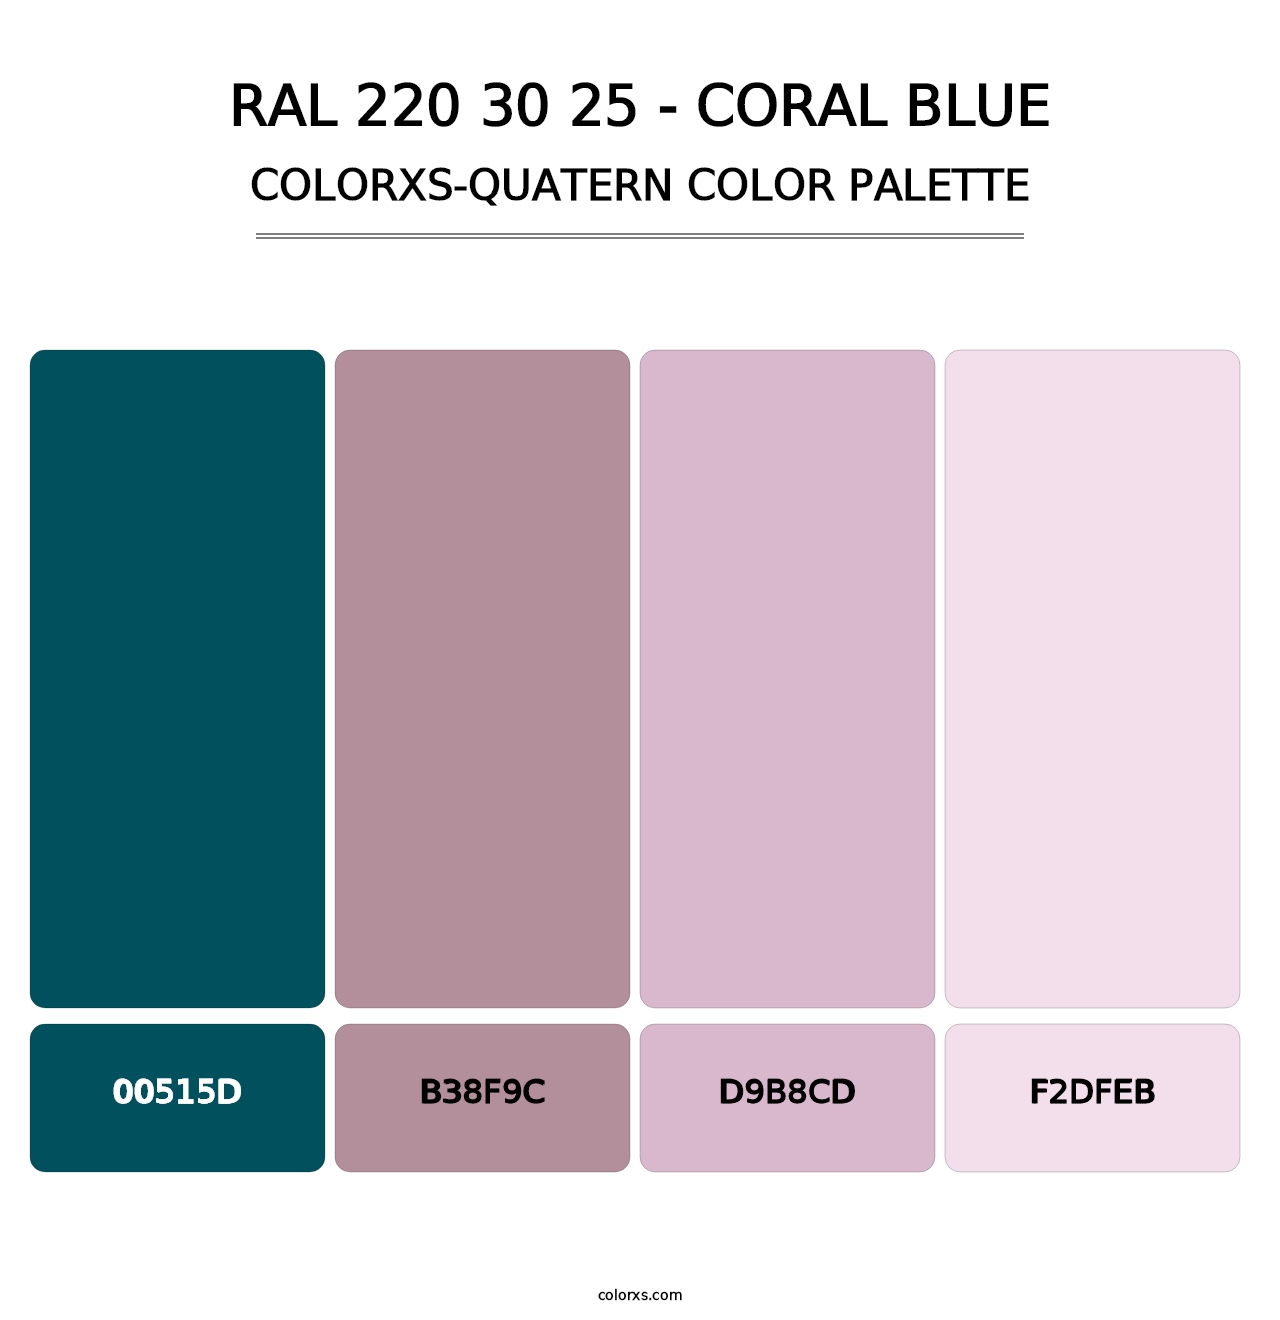 RAL 220 30 25 - Coral Blue - Colorxs Quatern Palette